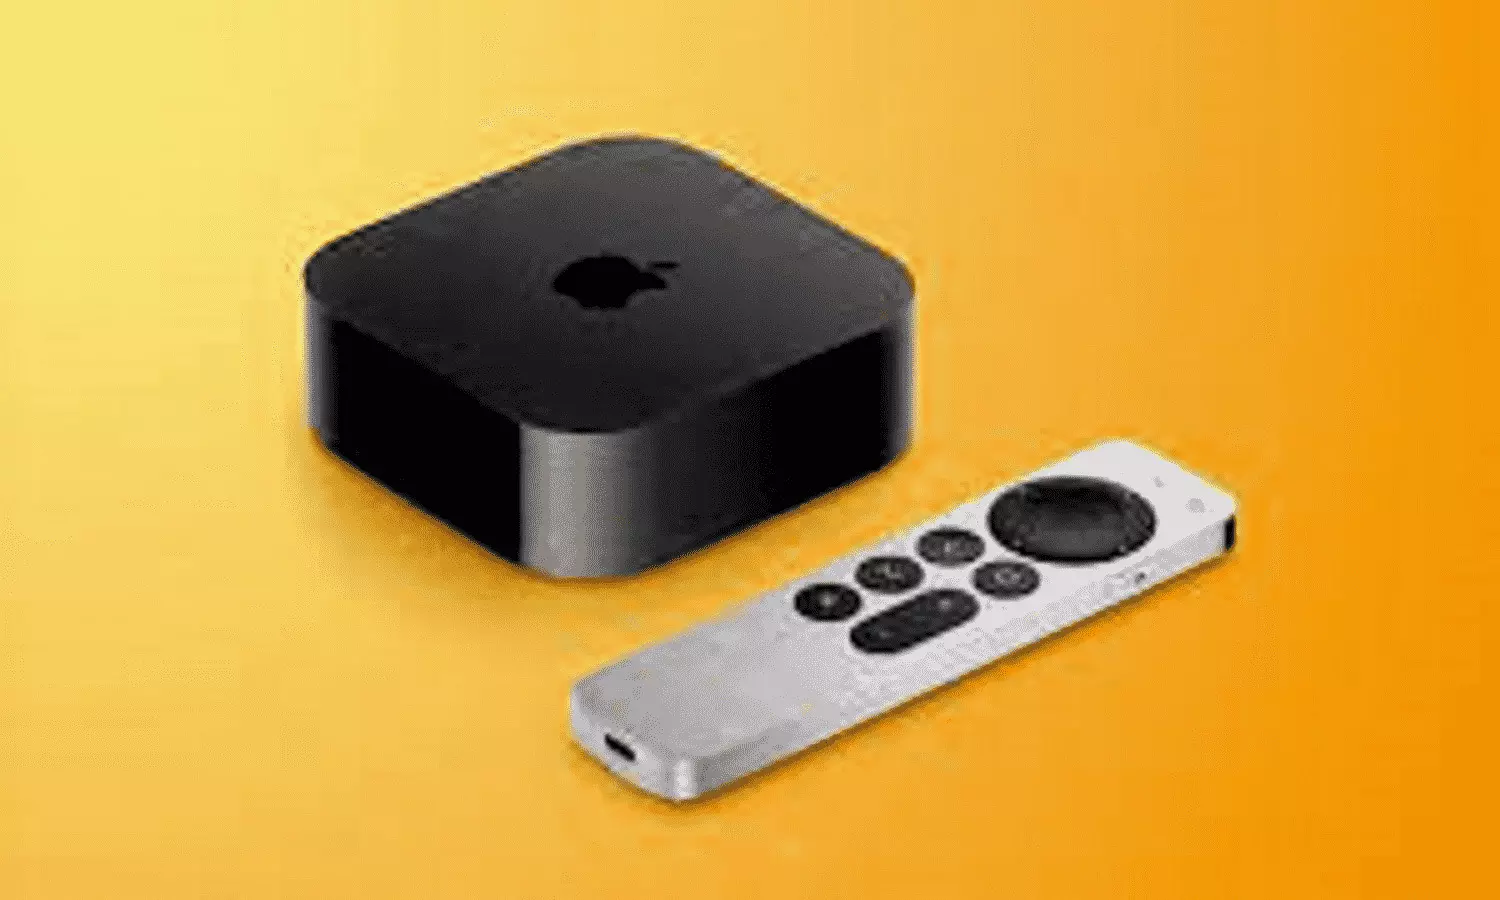 Apple TV 4K (3rd Gen) Review